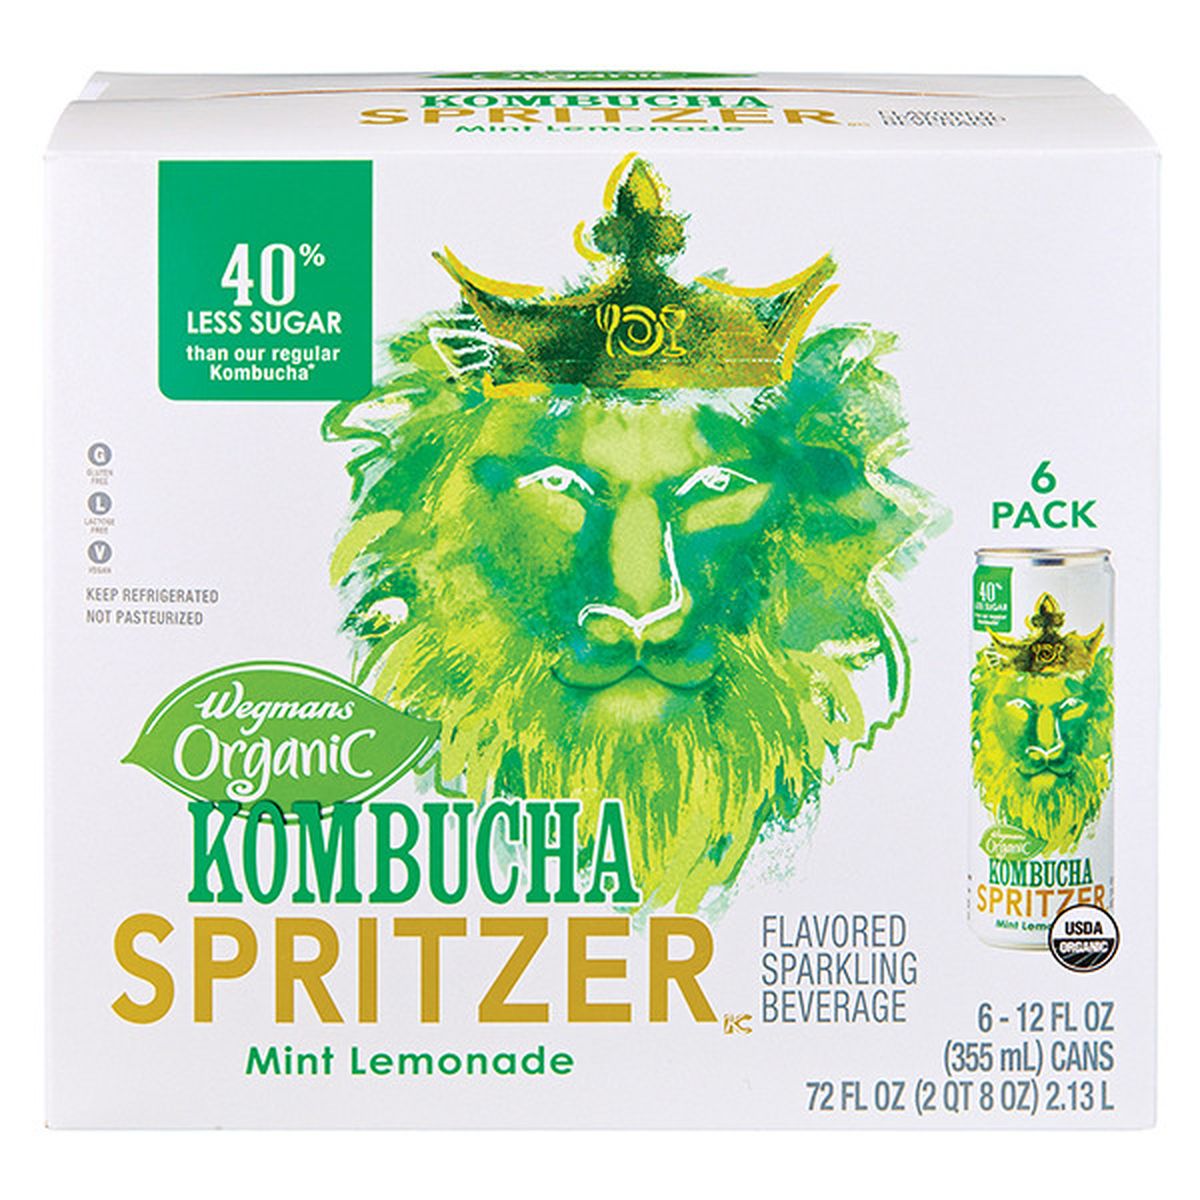 Calories in Wegmans Organic Mint Lemonade Kombucha Spritzer, 6 Pack